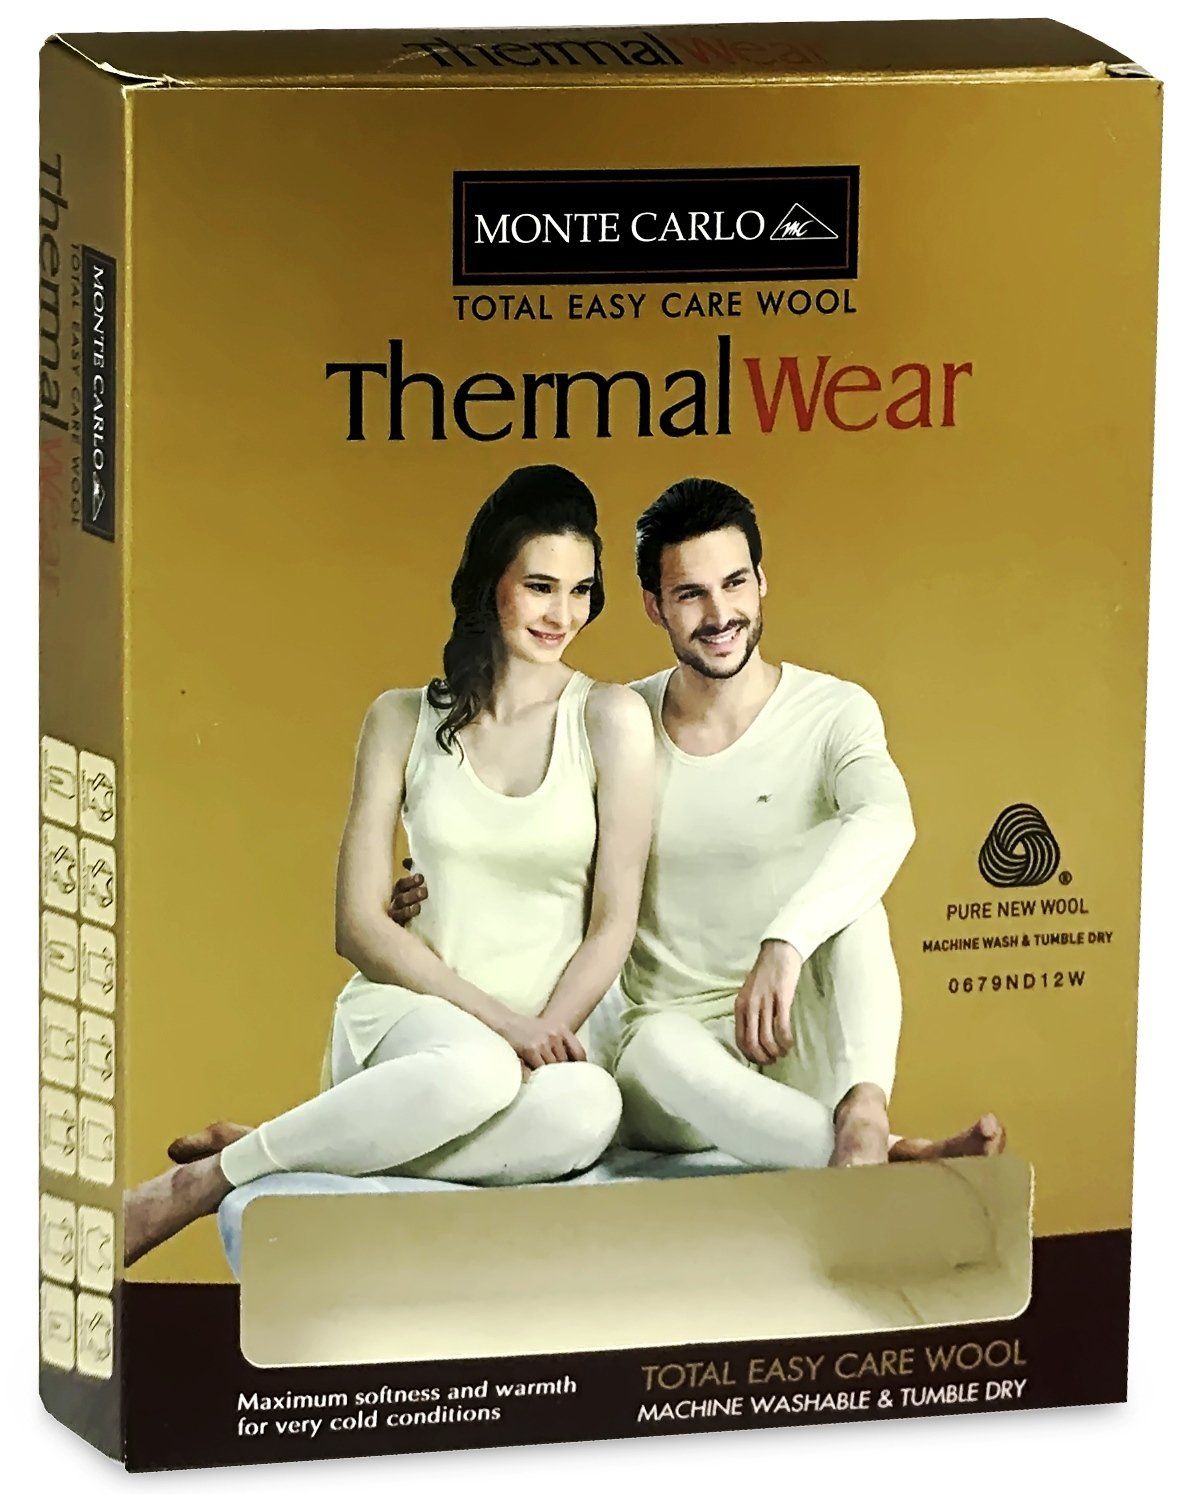 Monte Carlo Pure New Merino Wool Machine Washable Thermal for Men & Women  Off White